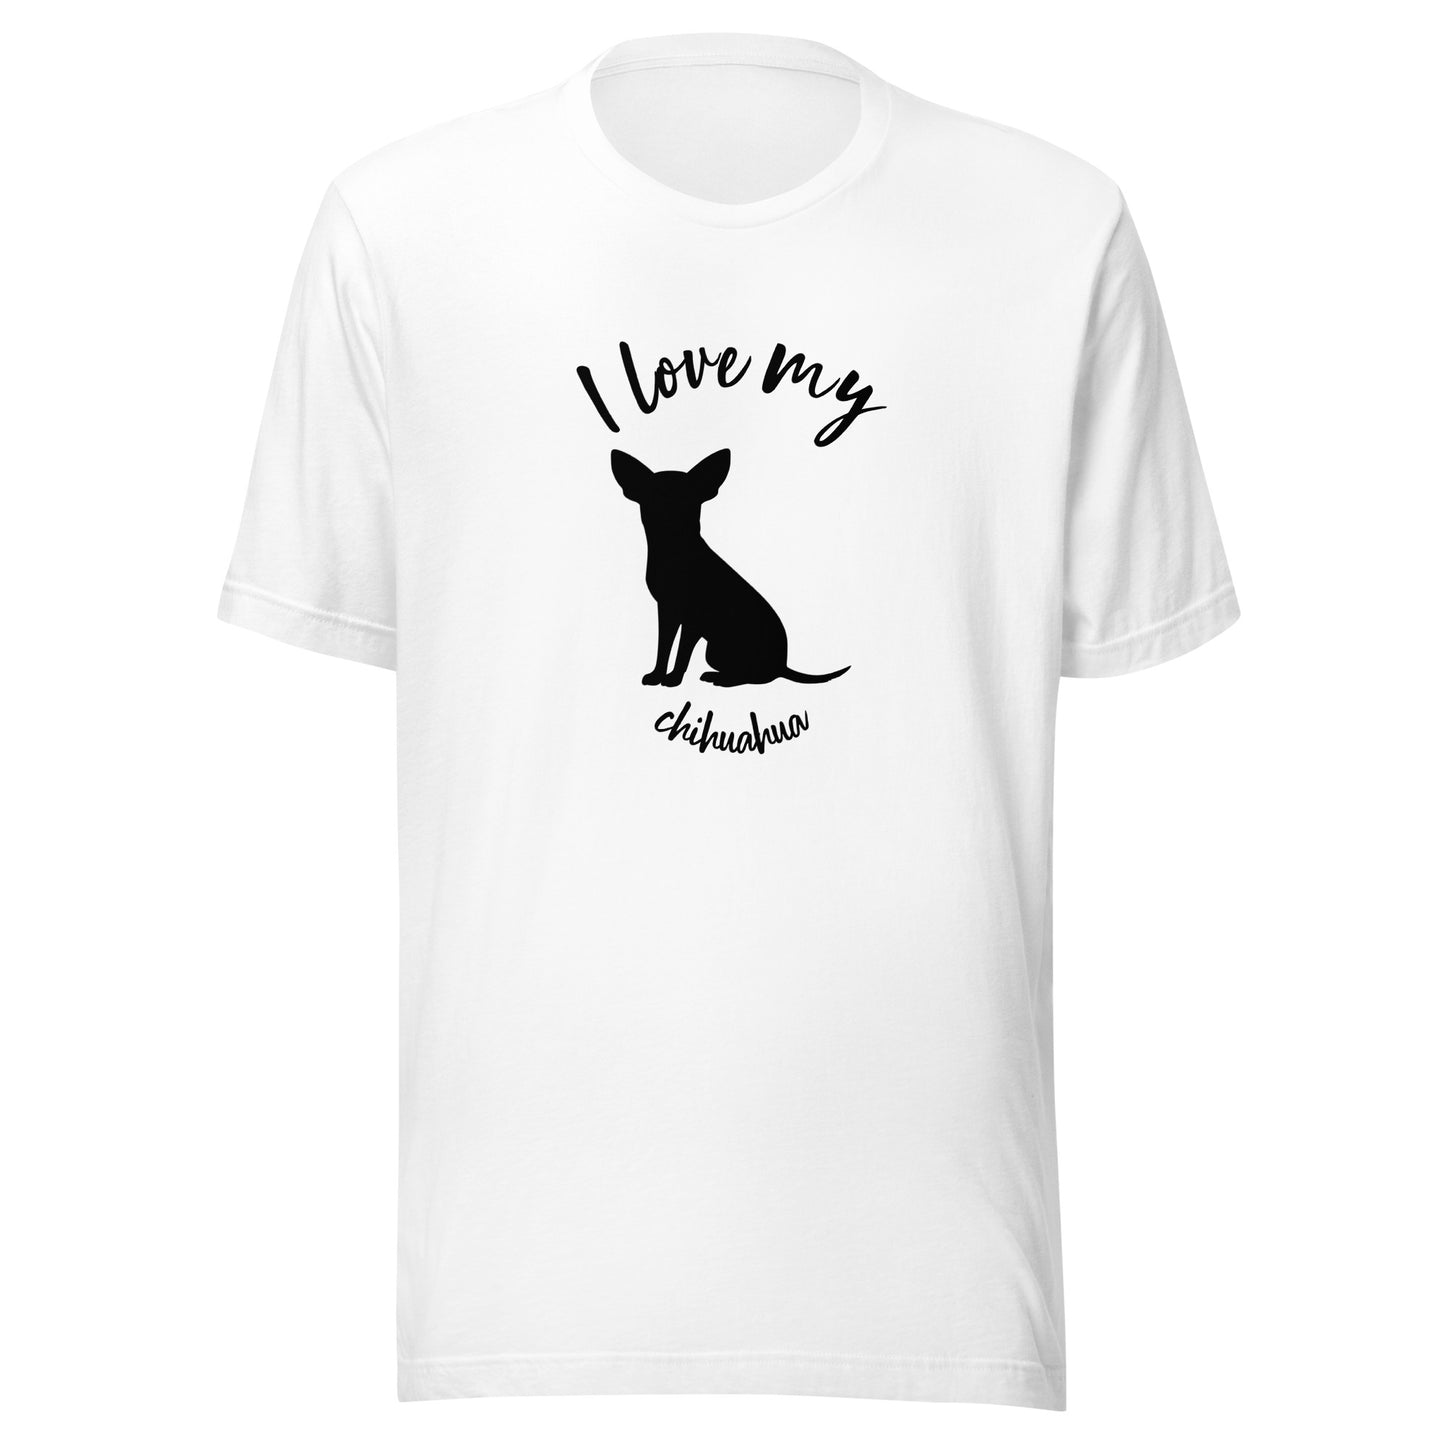 I Love my Chihuahua - Unisex t-shirt